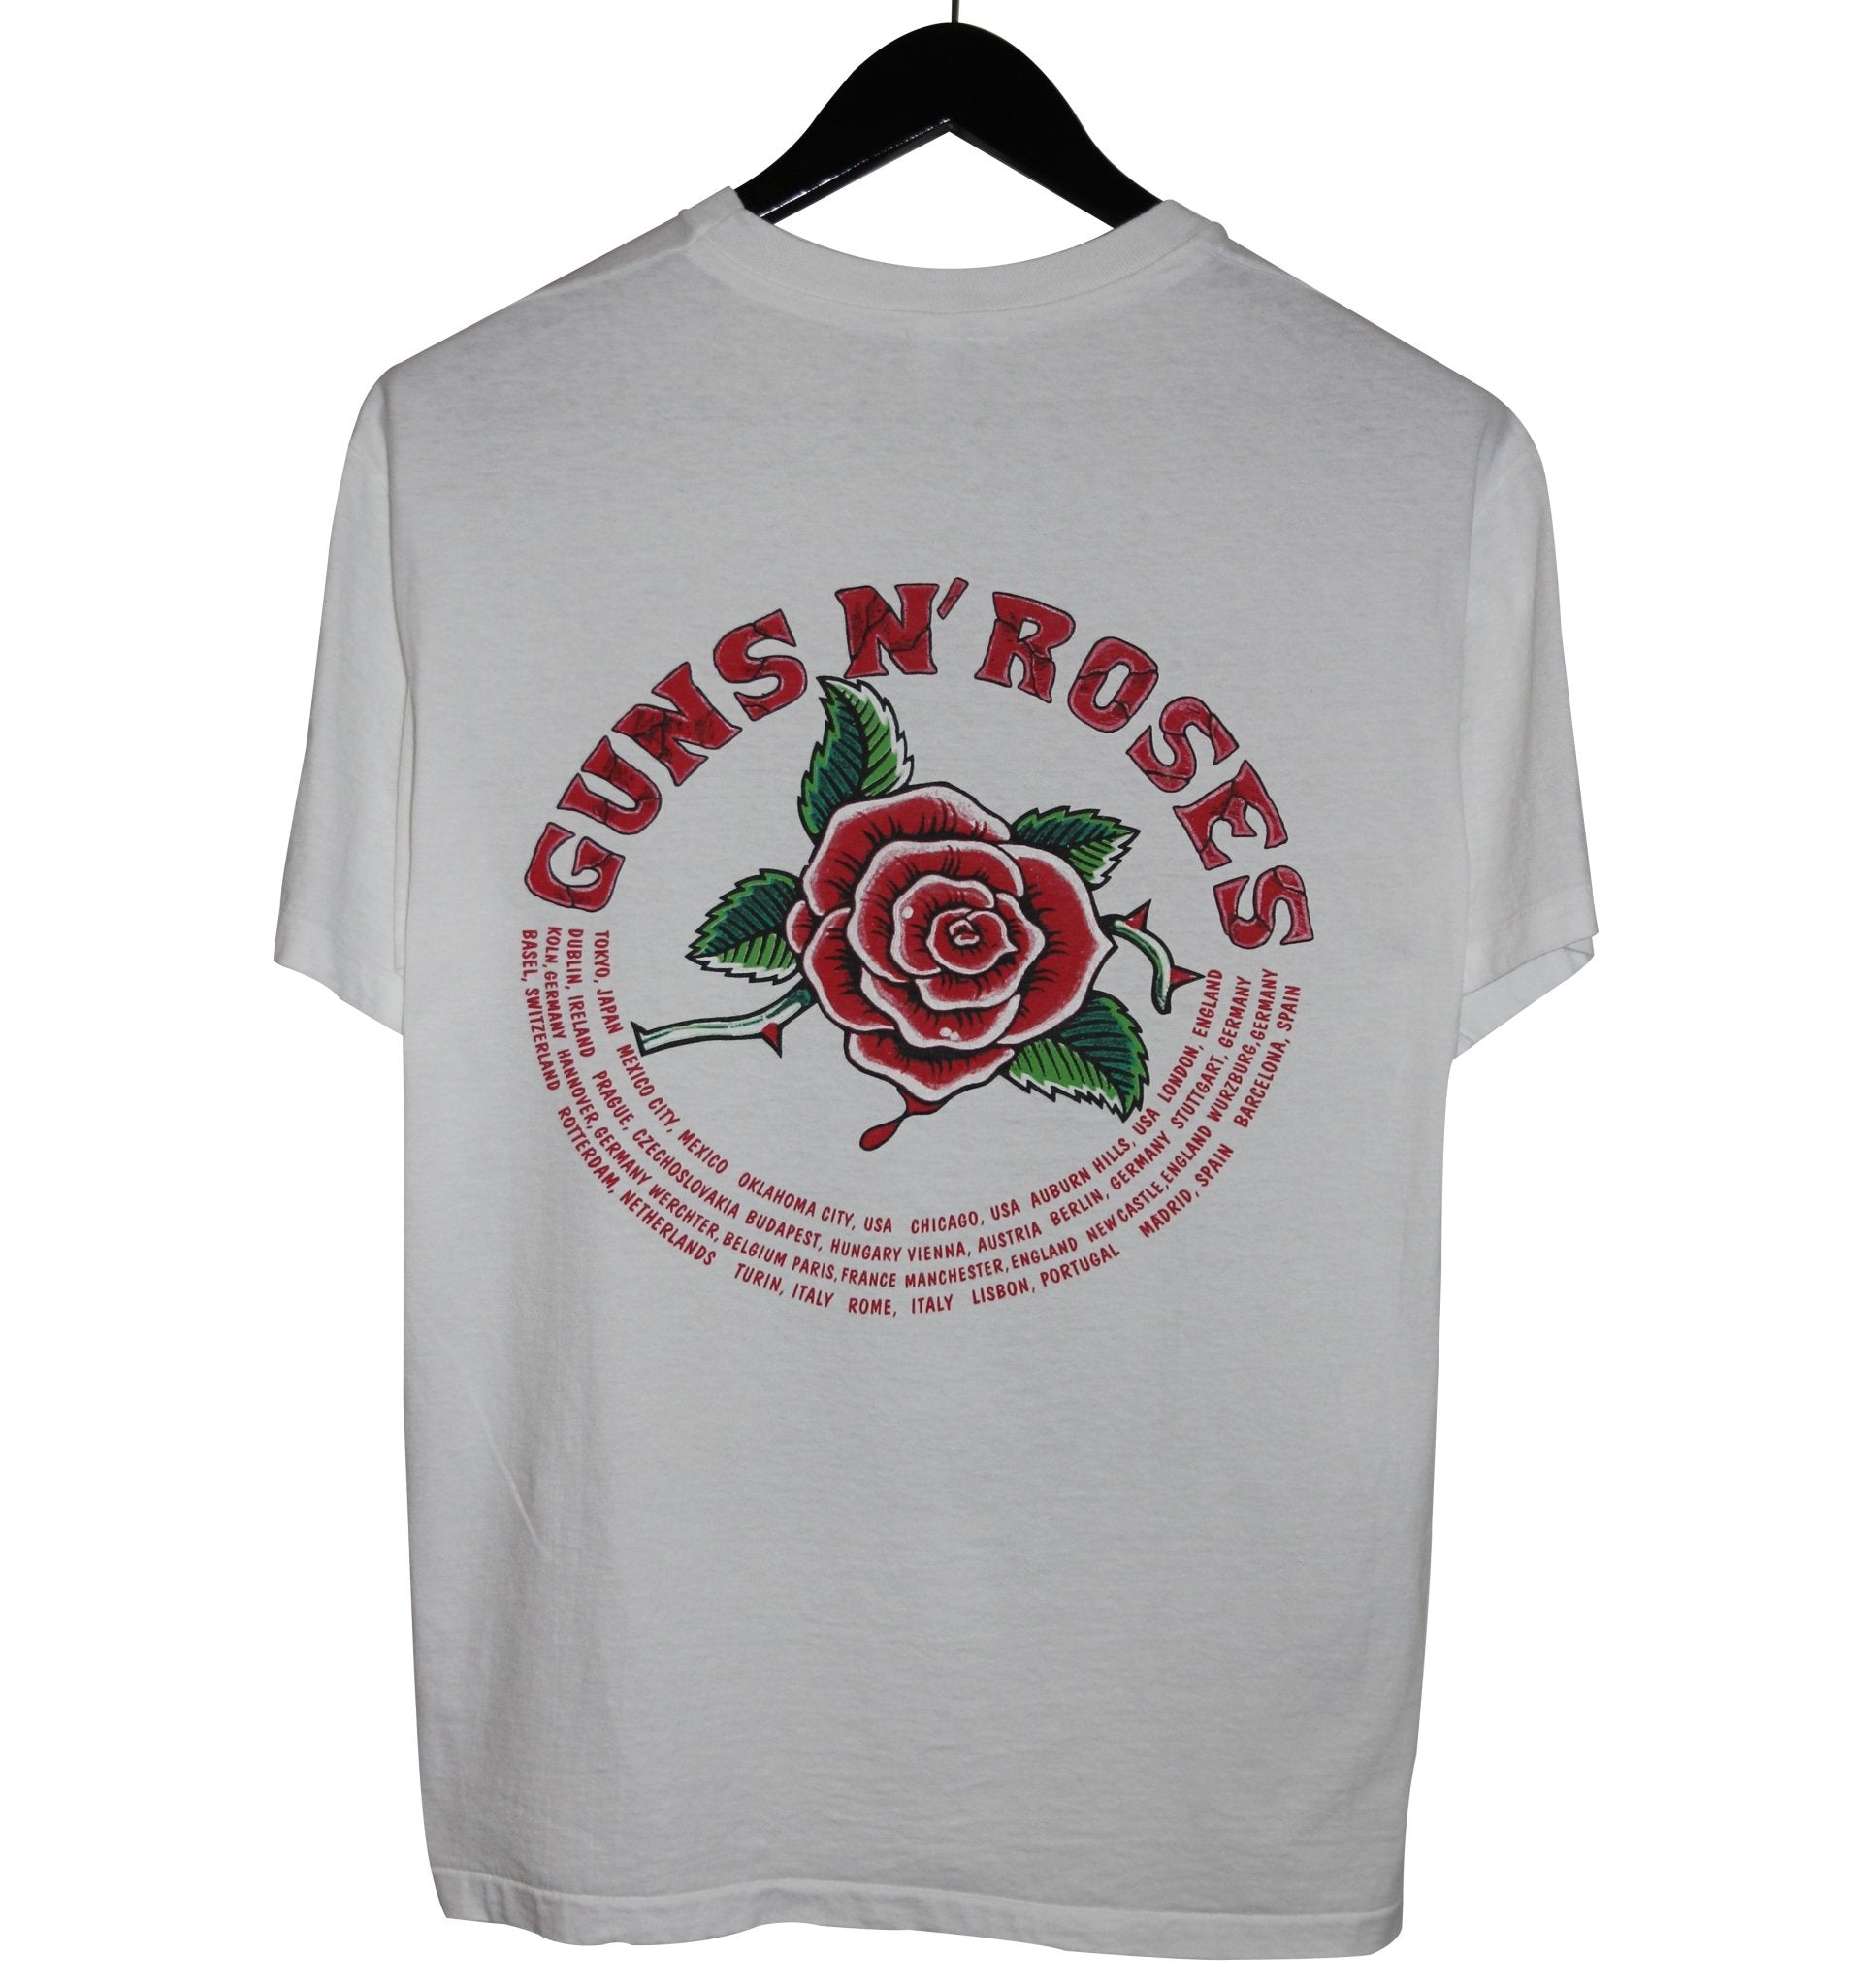 Guns N' Roses 1989 Axl Rose One In A Million Shirt – Faded AU